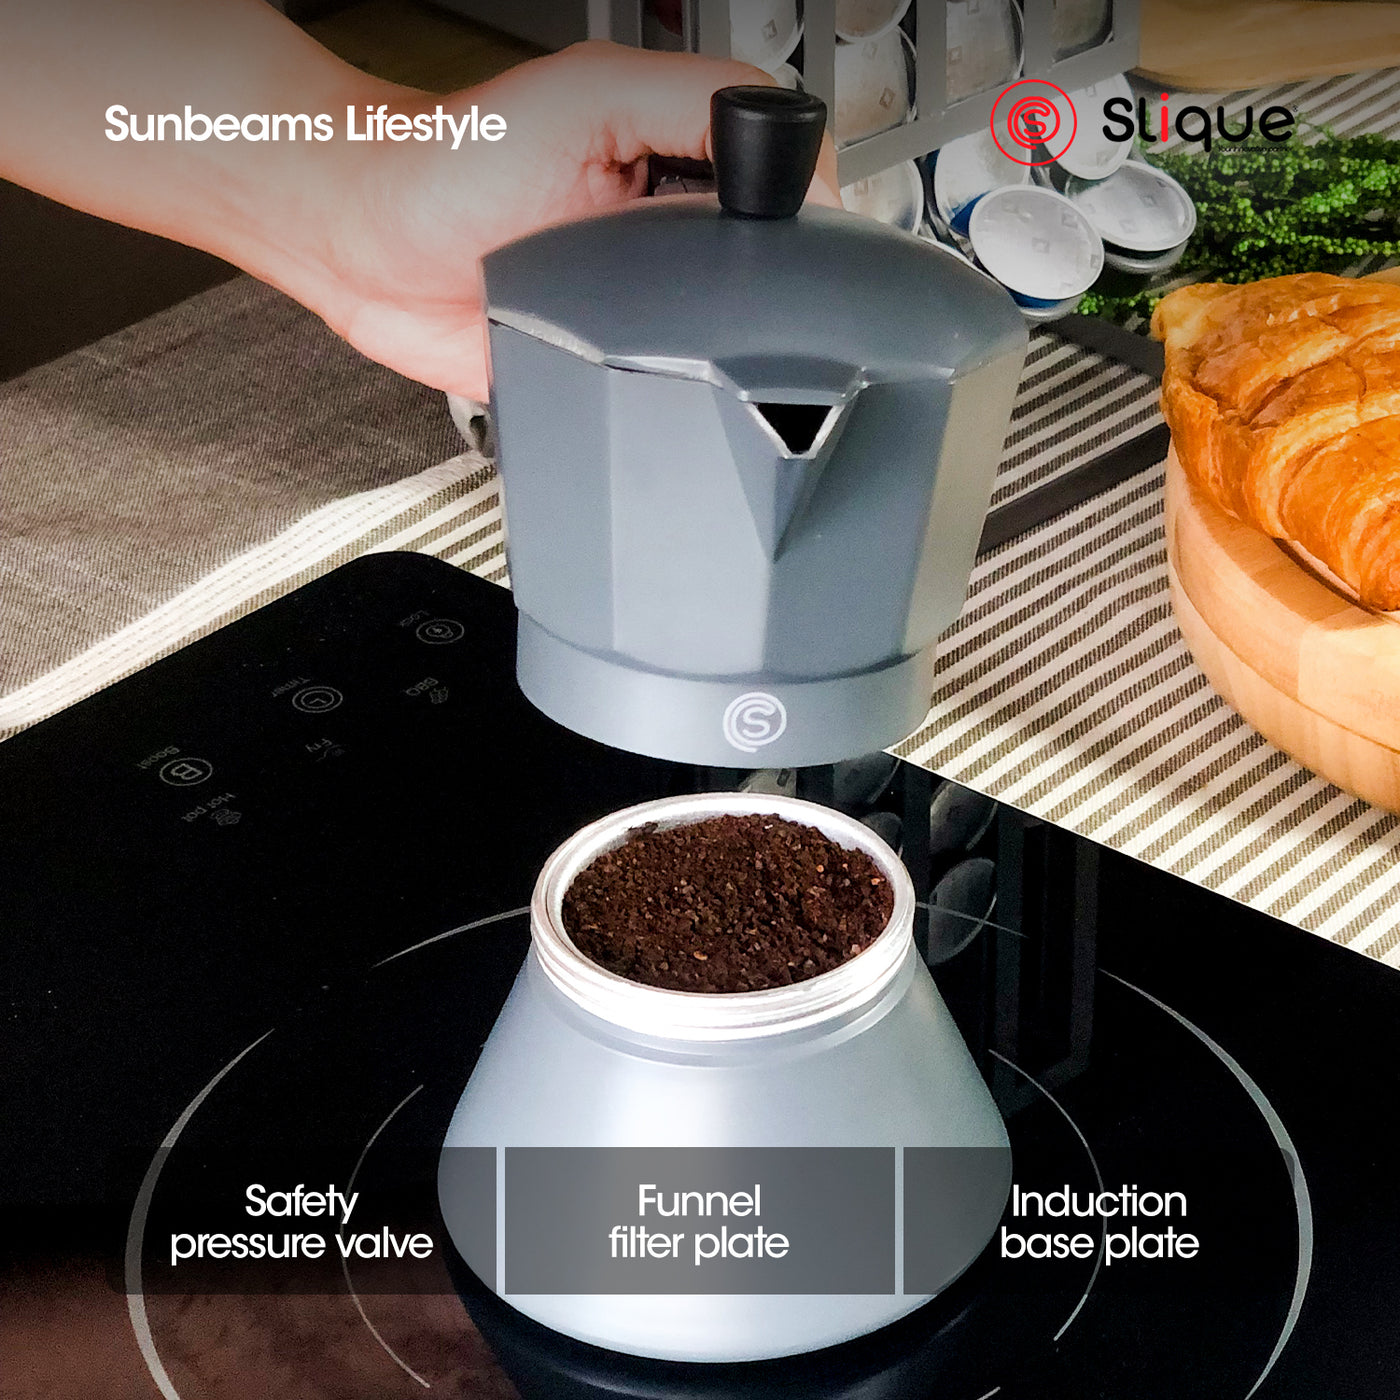 SLIQUE Premium Induction Espresso Coffee Maker 150ml|0.15L Coffee Lovers Modern Italian Design Amazing Gift Idea For Any Occasion!